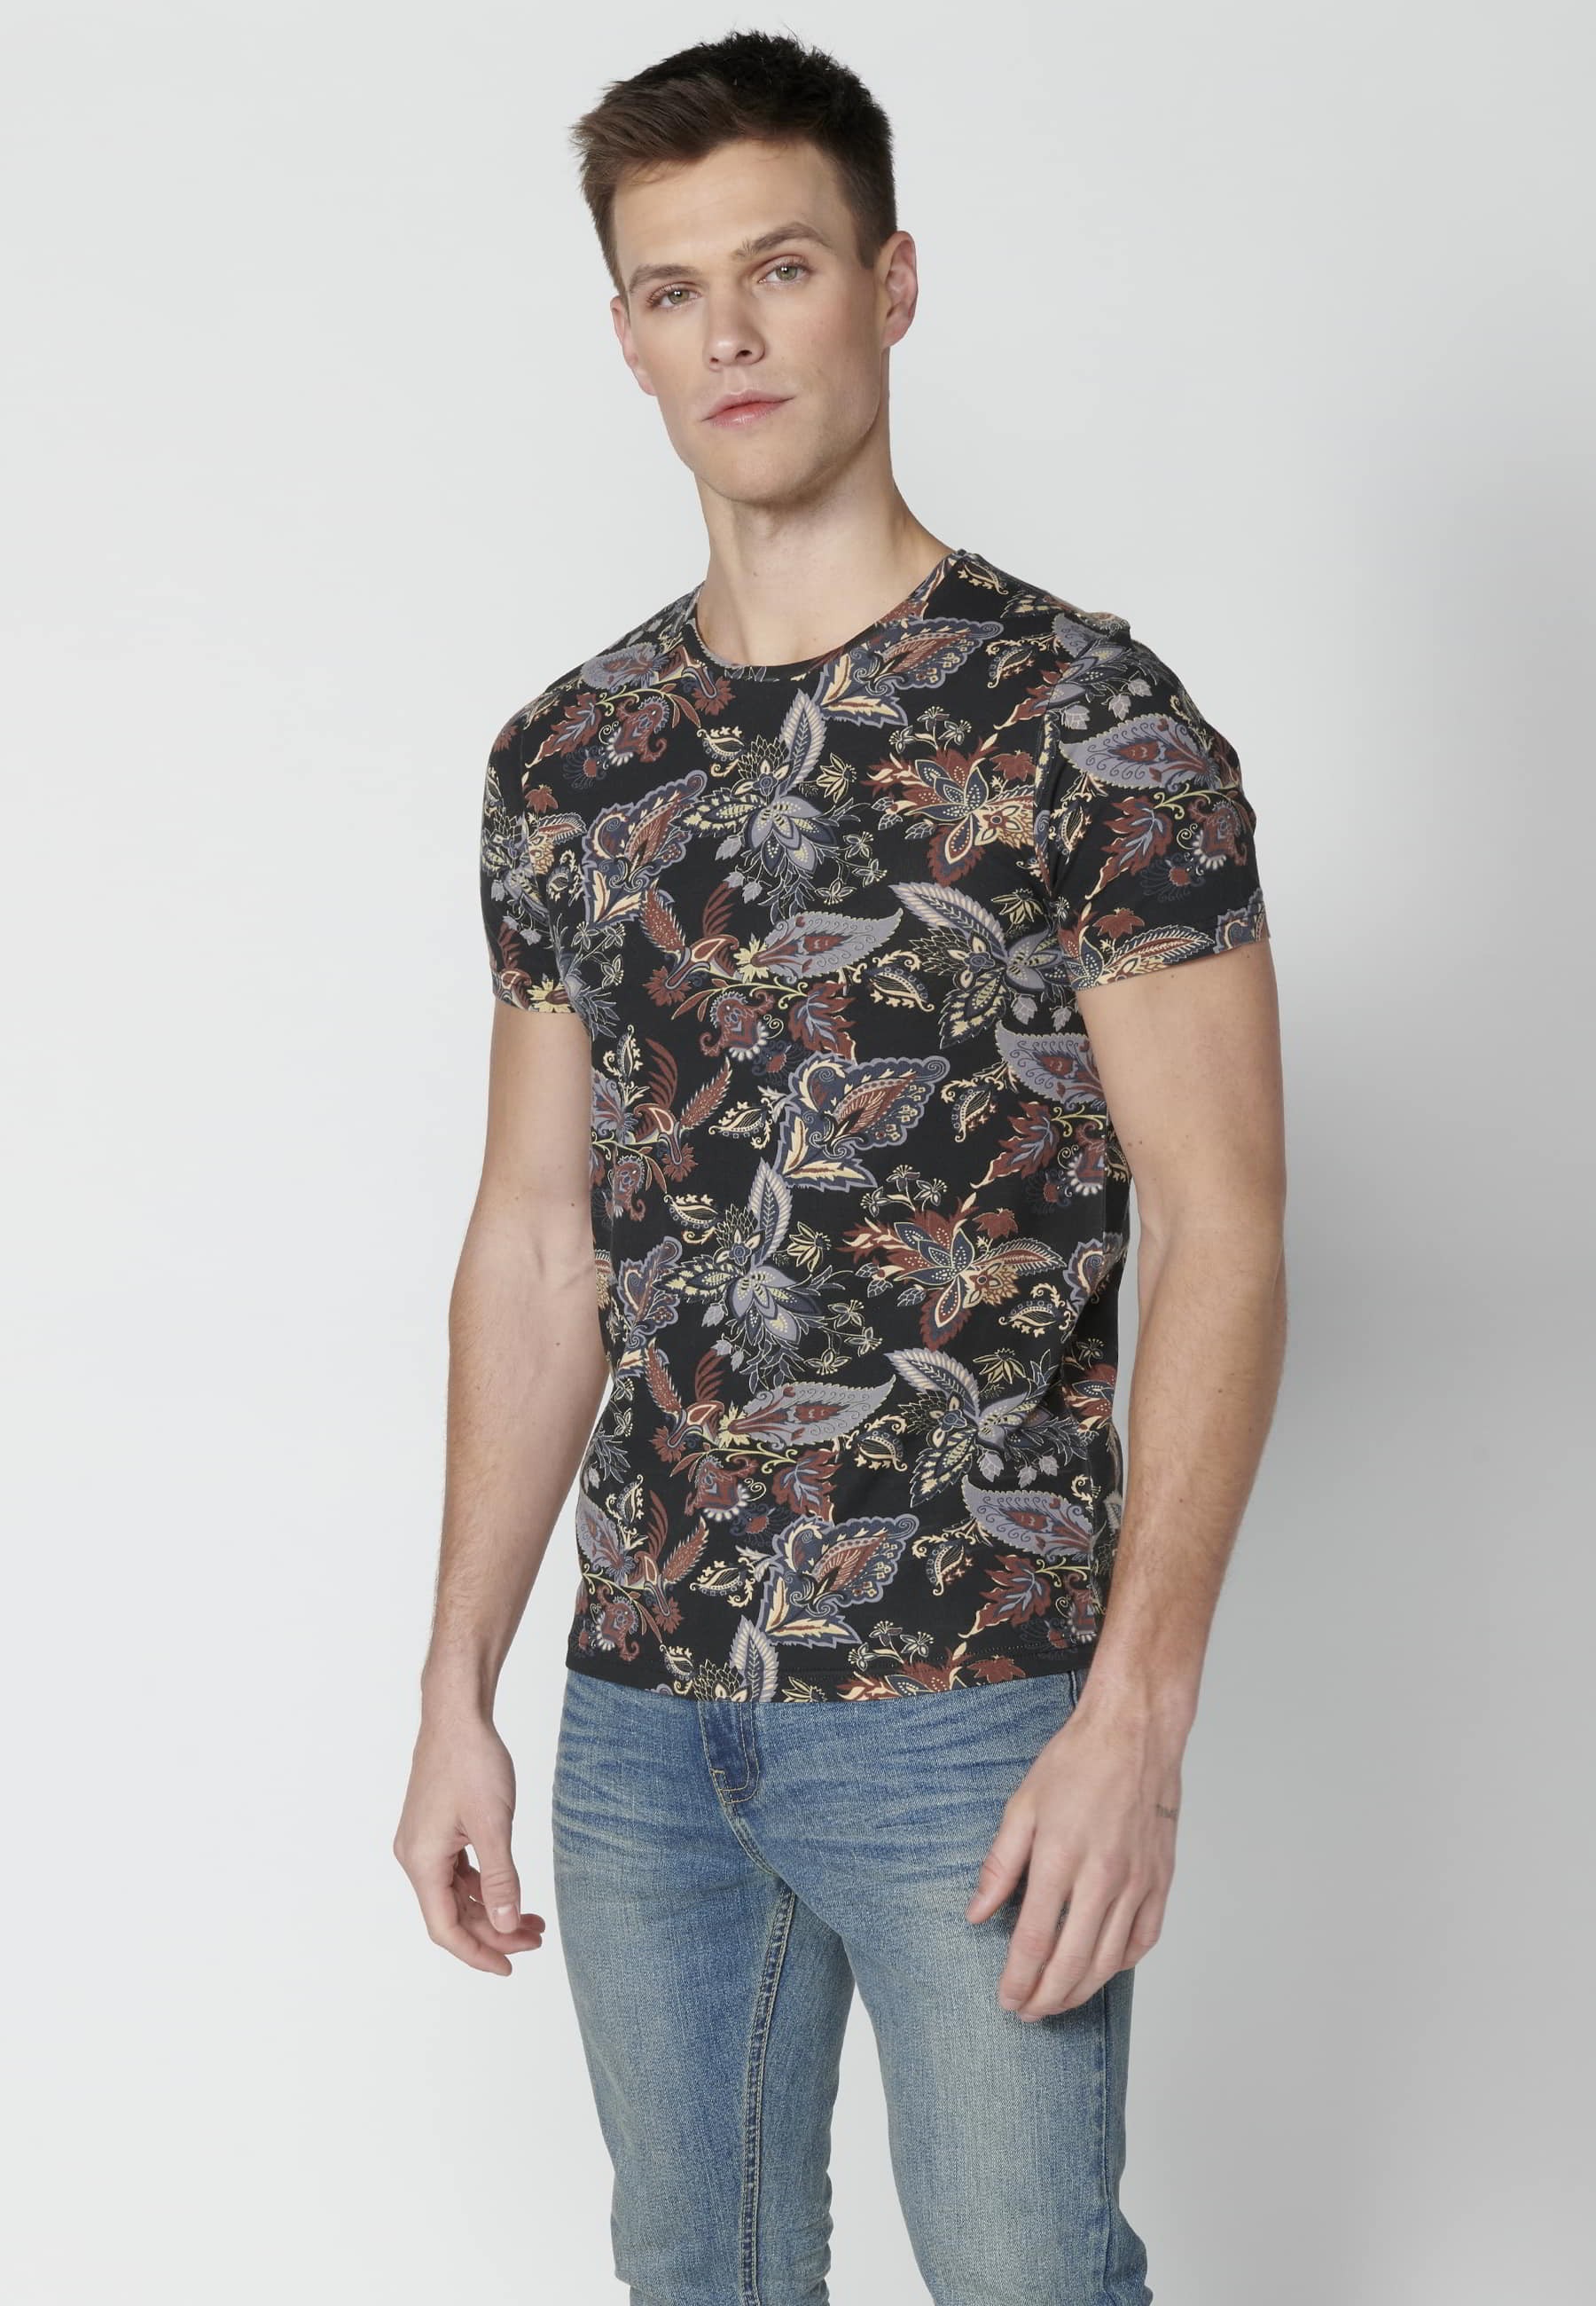 Black Floral Print Cotton Short Sleeve T-shirt for Men